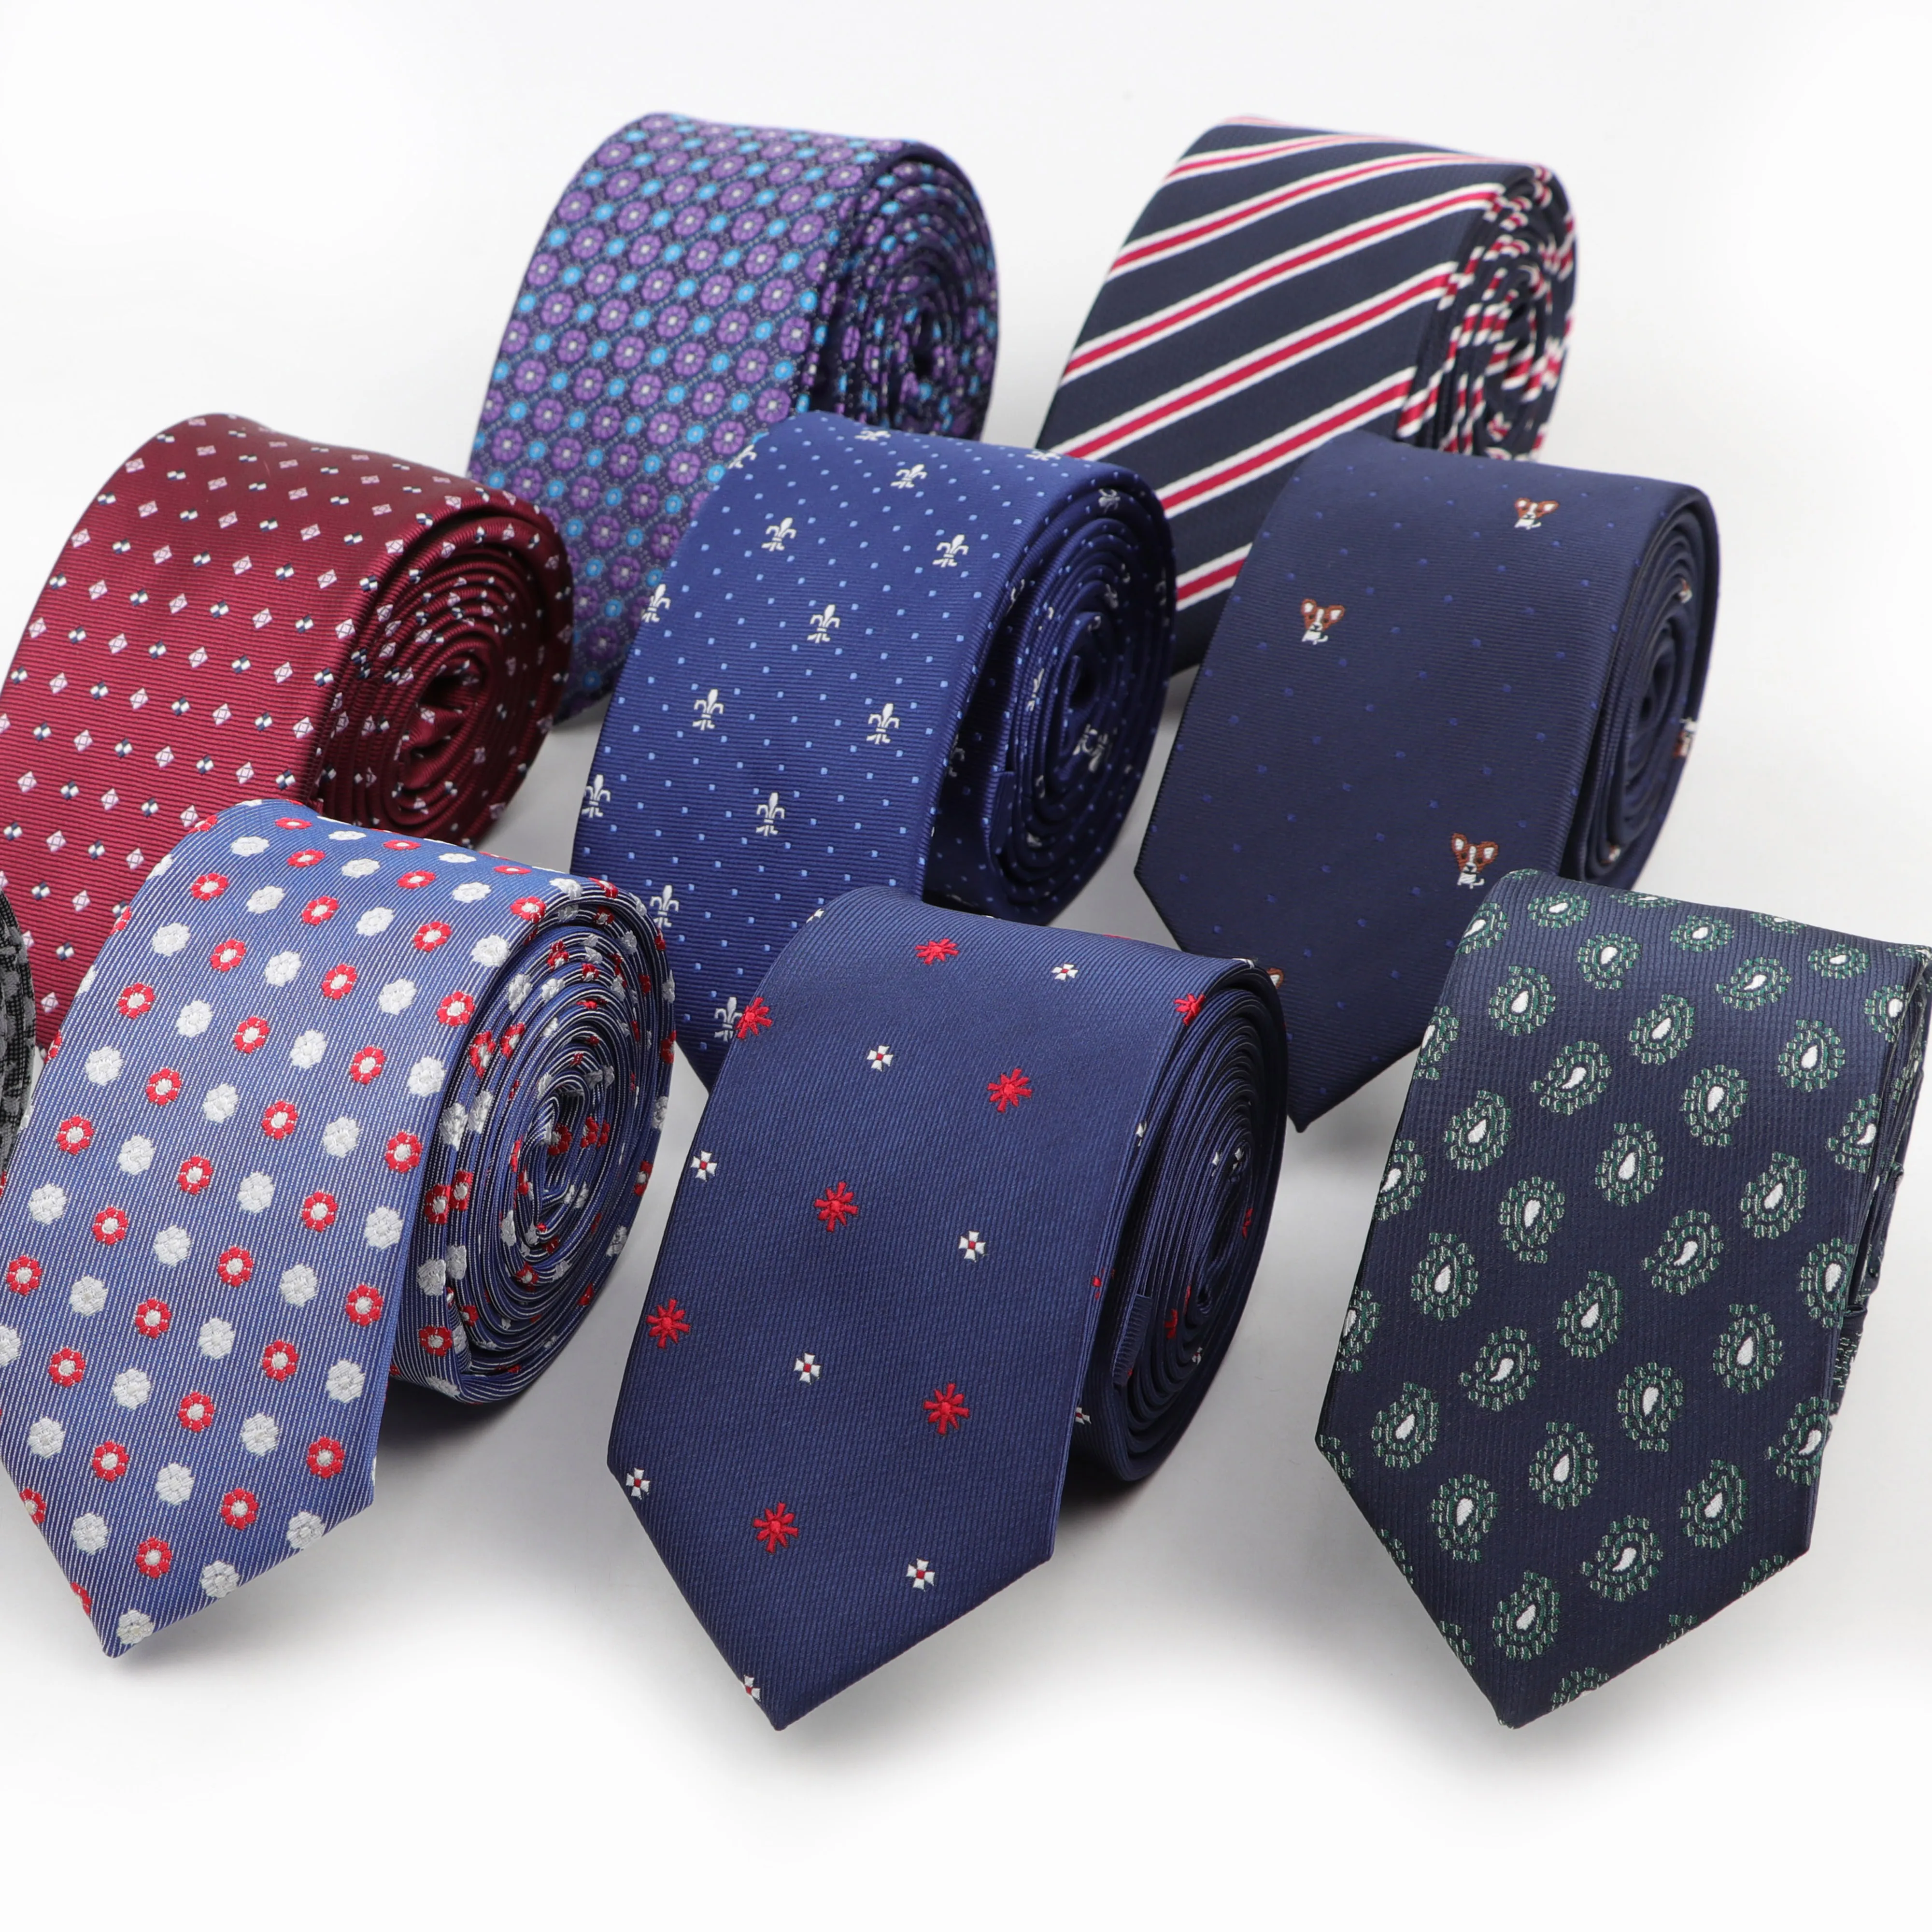 New Formal Ties For Men business wedding tie Stripe Designer 6cm Jacquard Necktie Accessories Daily Wear Cravat